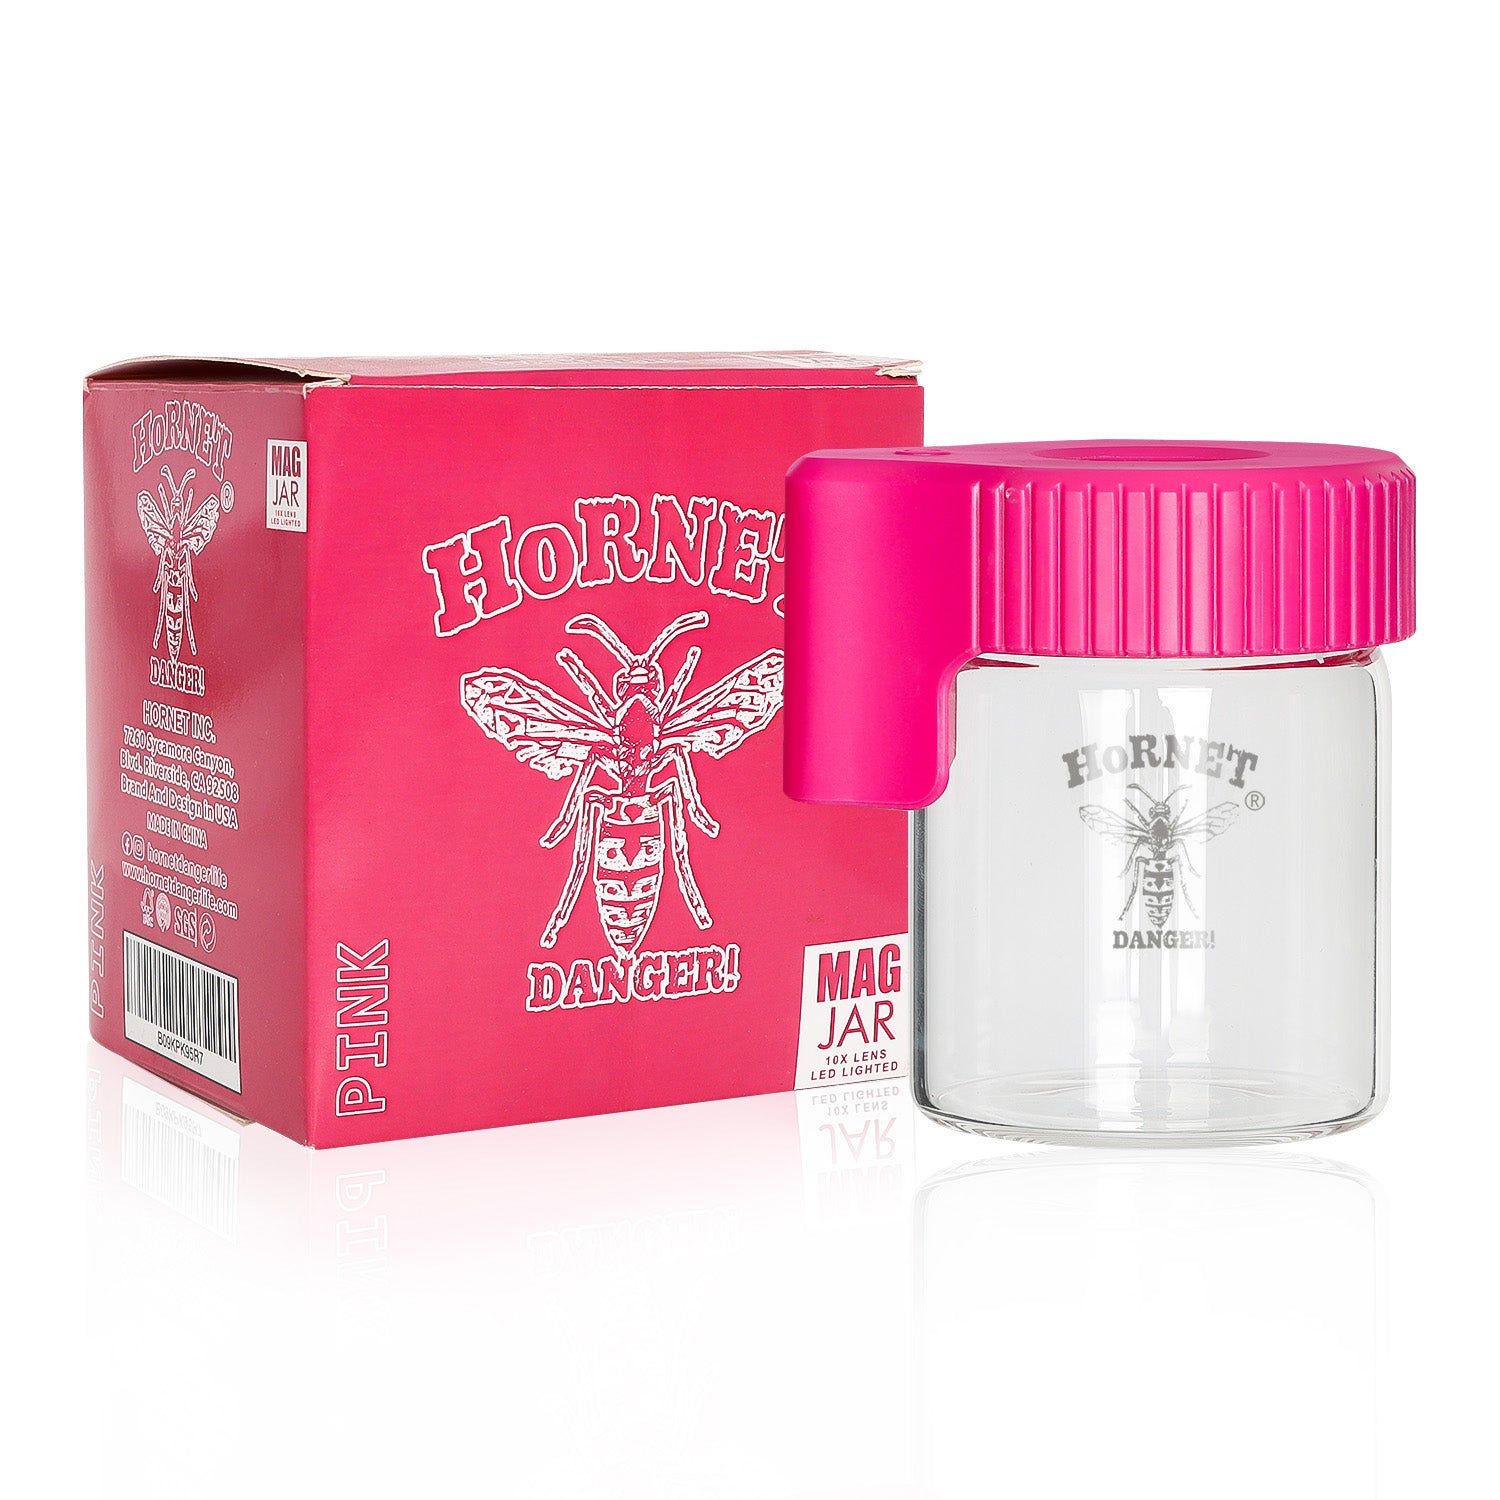 HORNET Light-Up Led Glass Storage Jar, Air Tight & Magnifying View Jar, Pink Color Jar Lid, Rechargeable Glass Jar